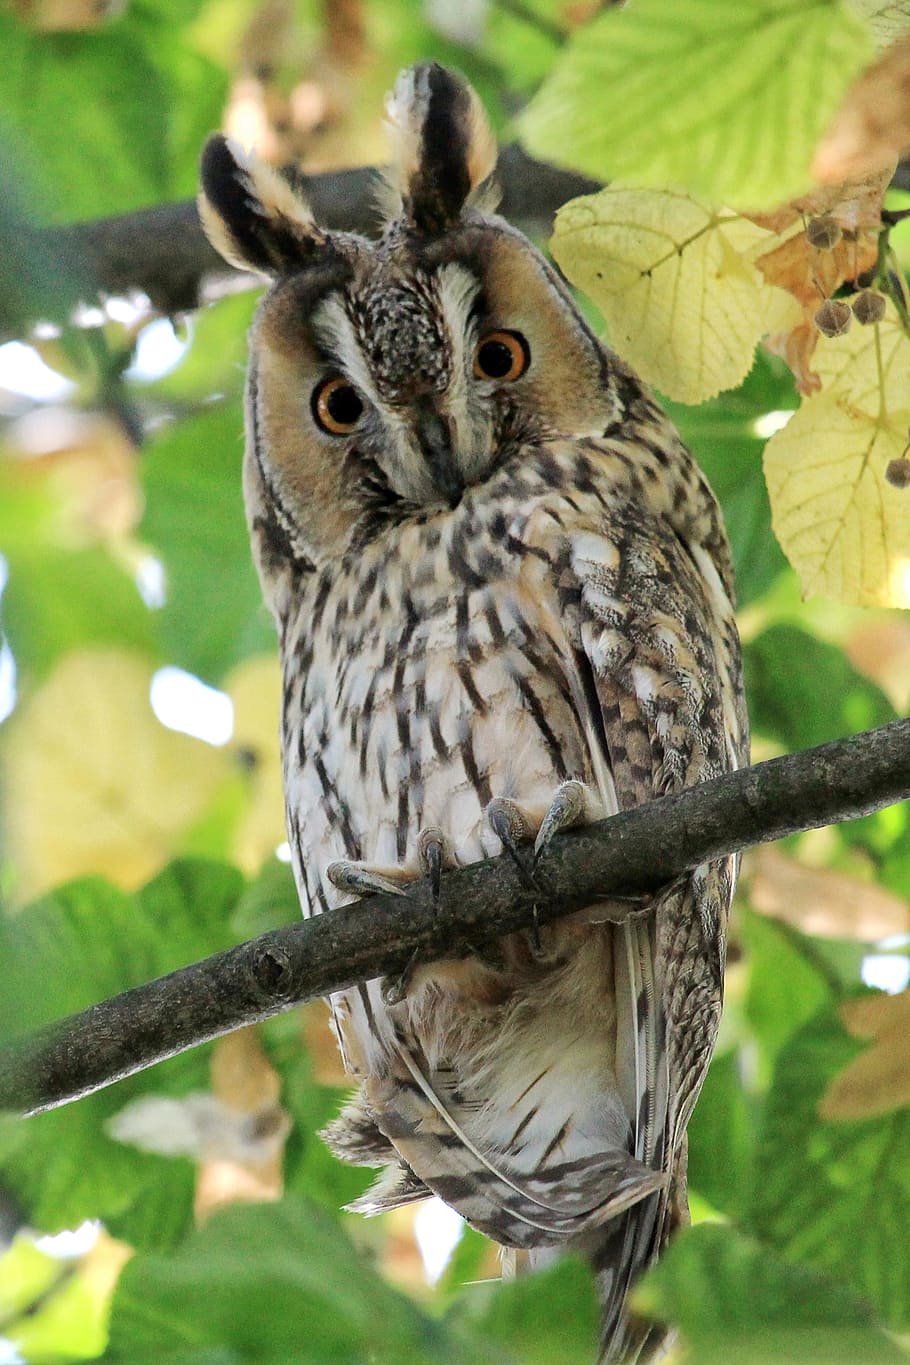 black, brown, owl perch, tree branch, Long Eared Owl, Scops-Owl, Bird, owl, wild bird, wildlife photography